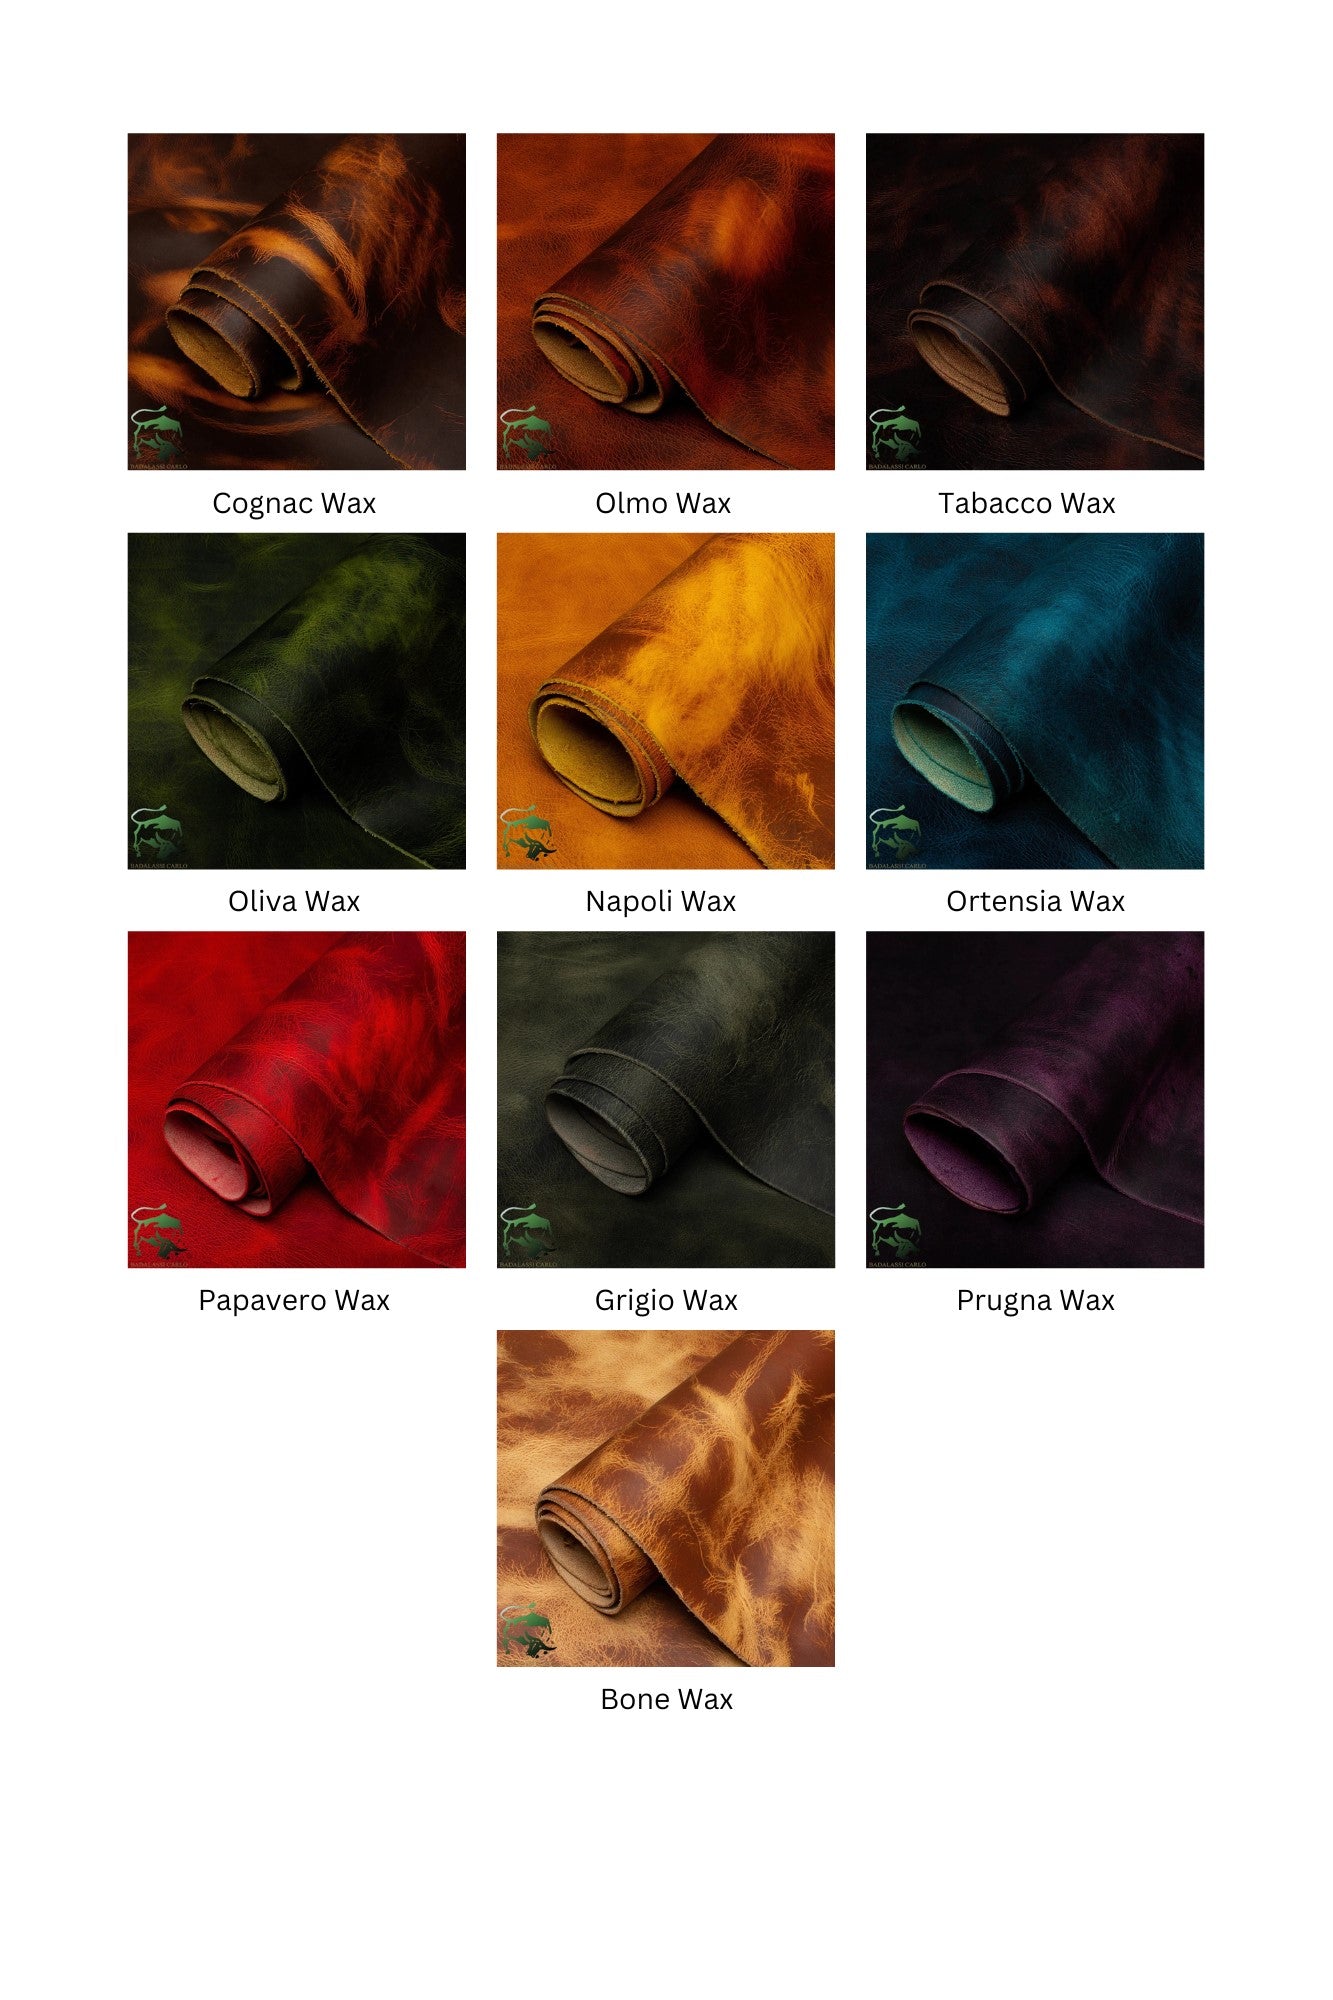 Winterton Wallet - Wax Leather in 7 Colours